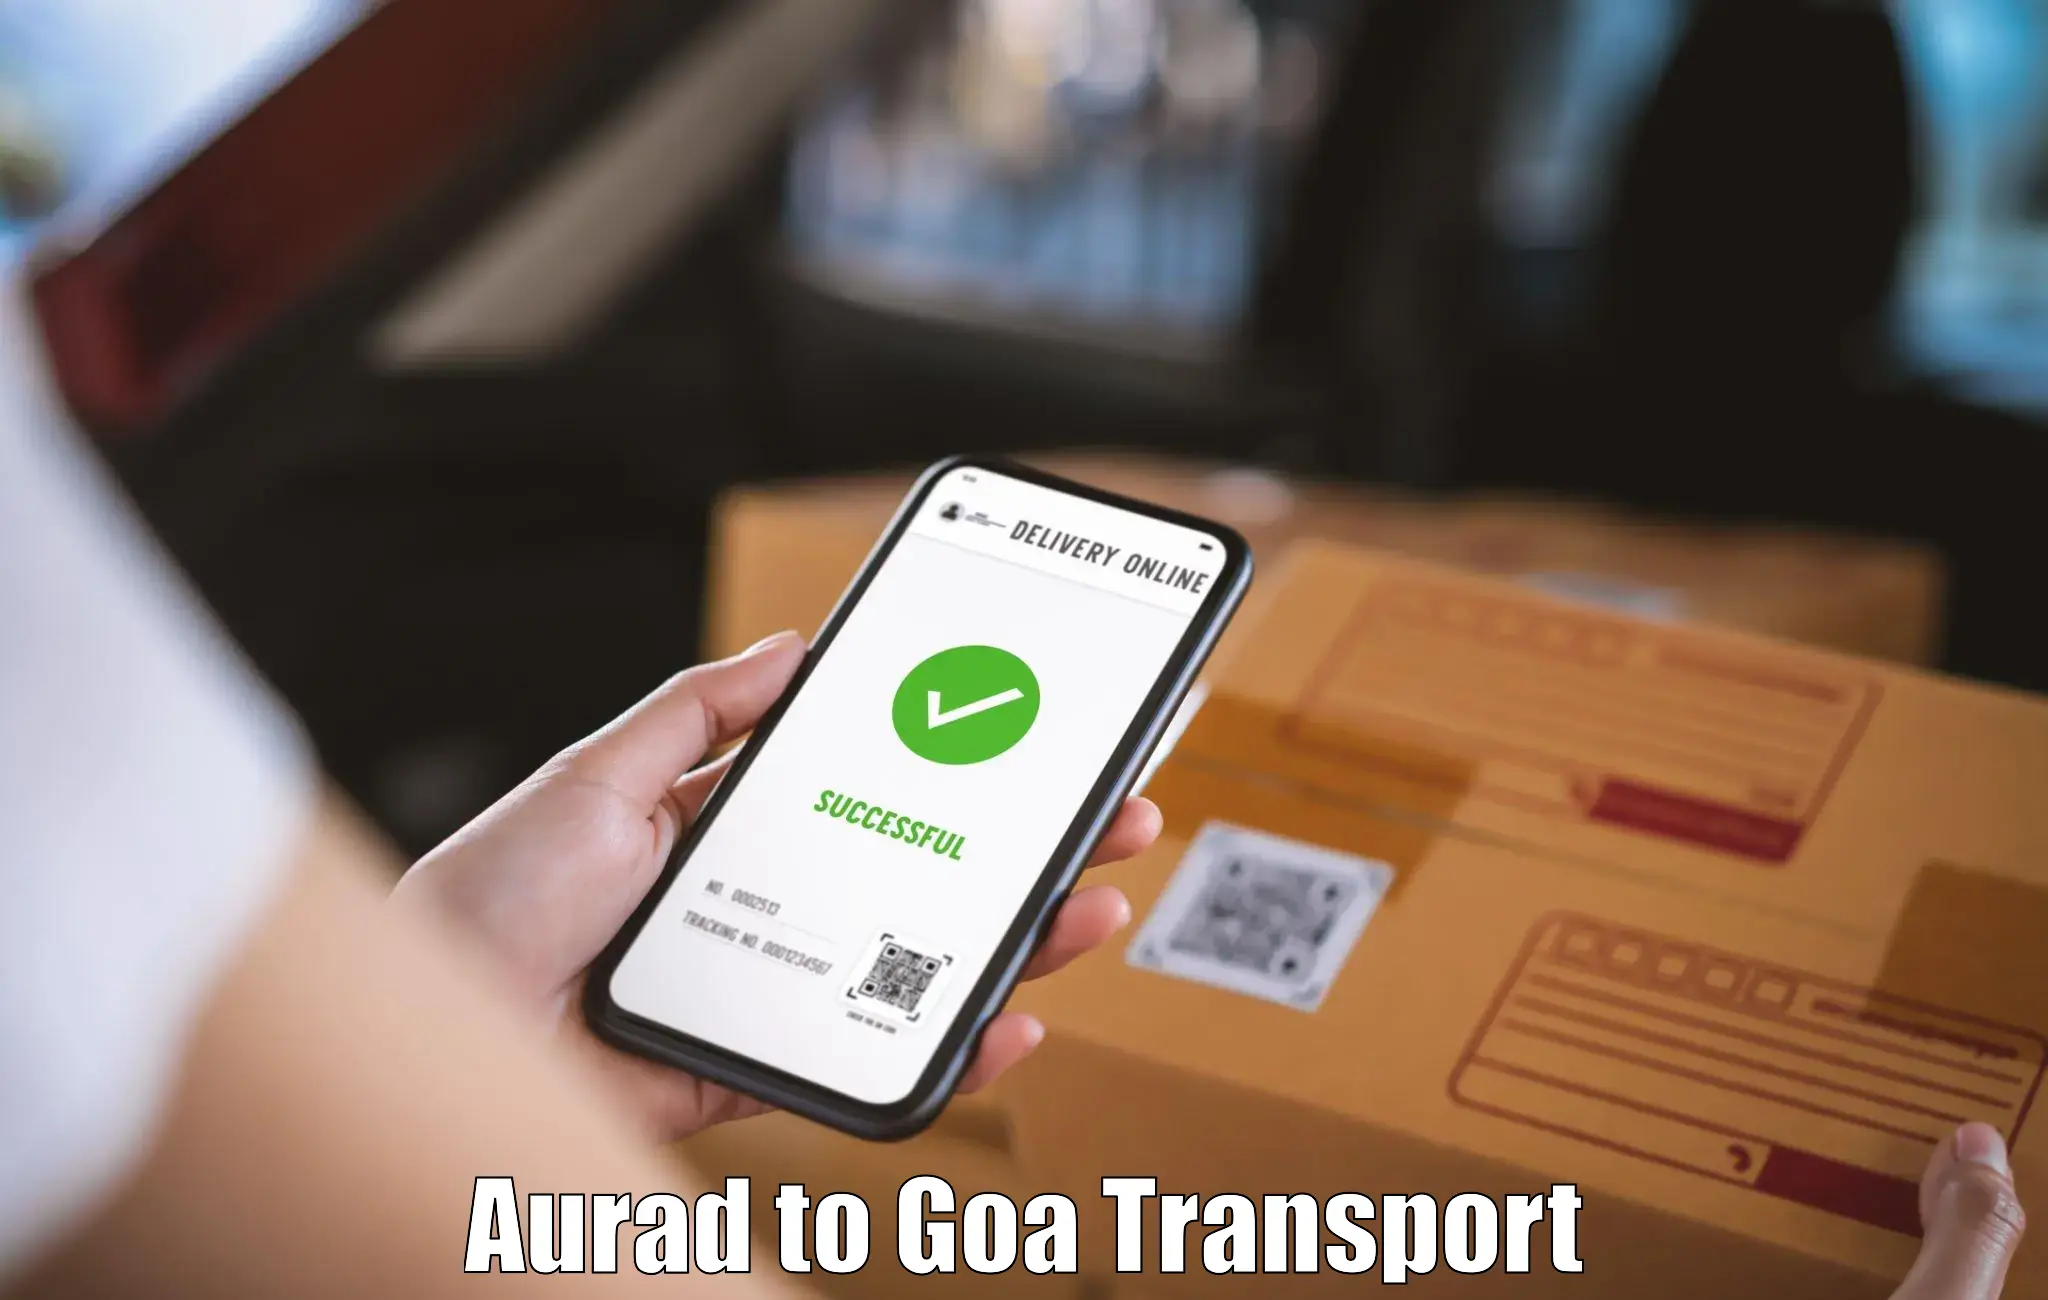 Vehicle transport services Aurad to Goa